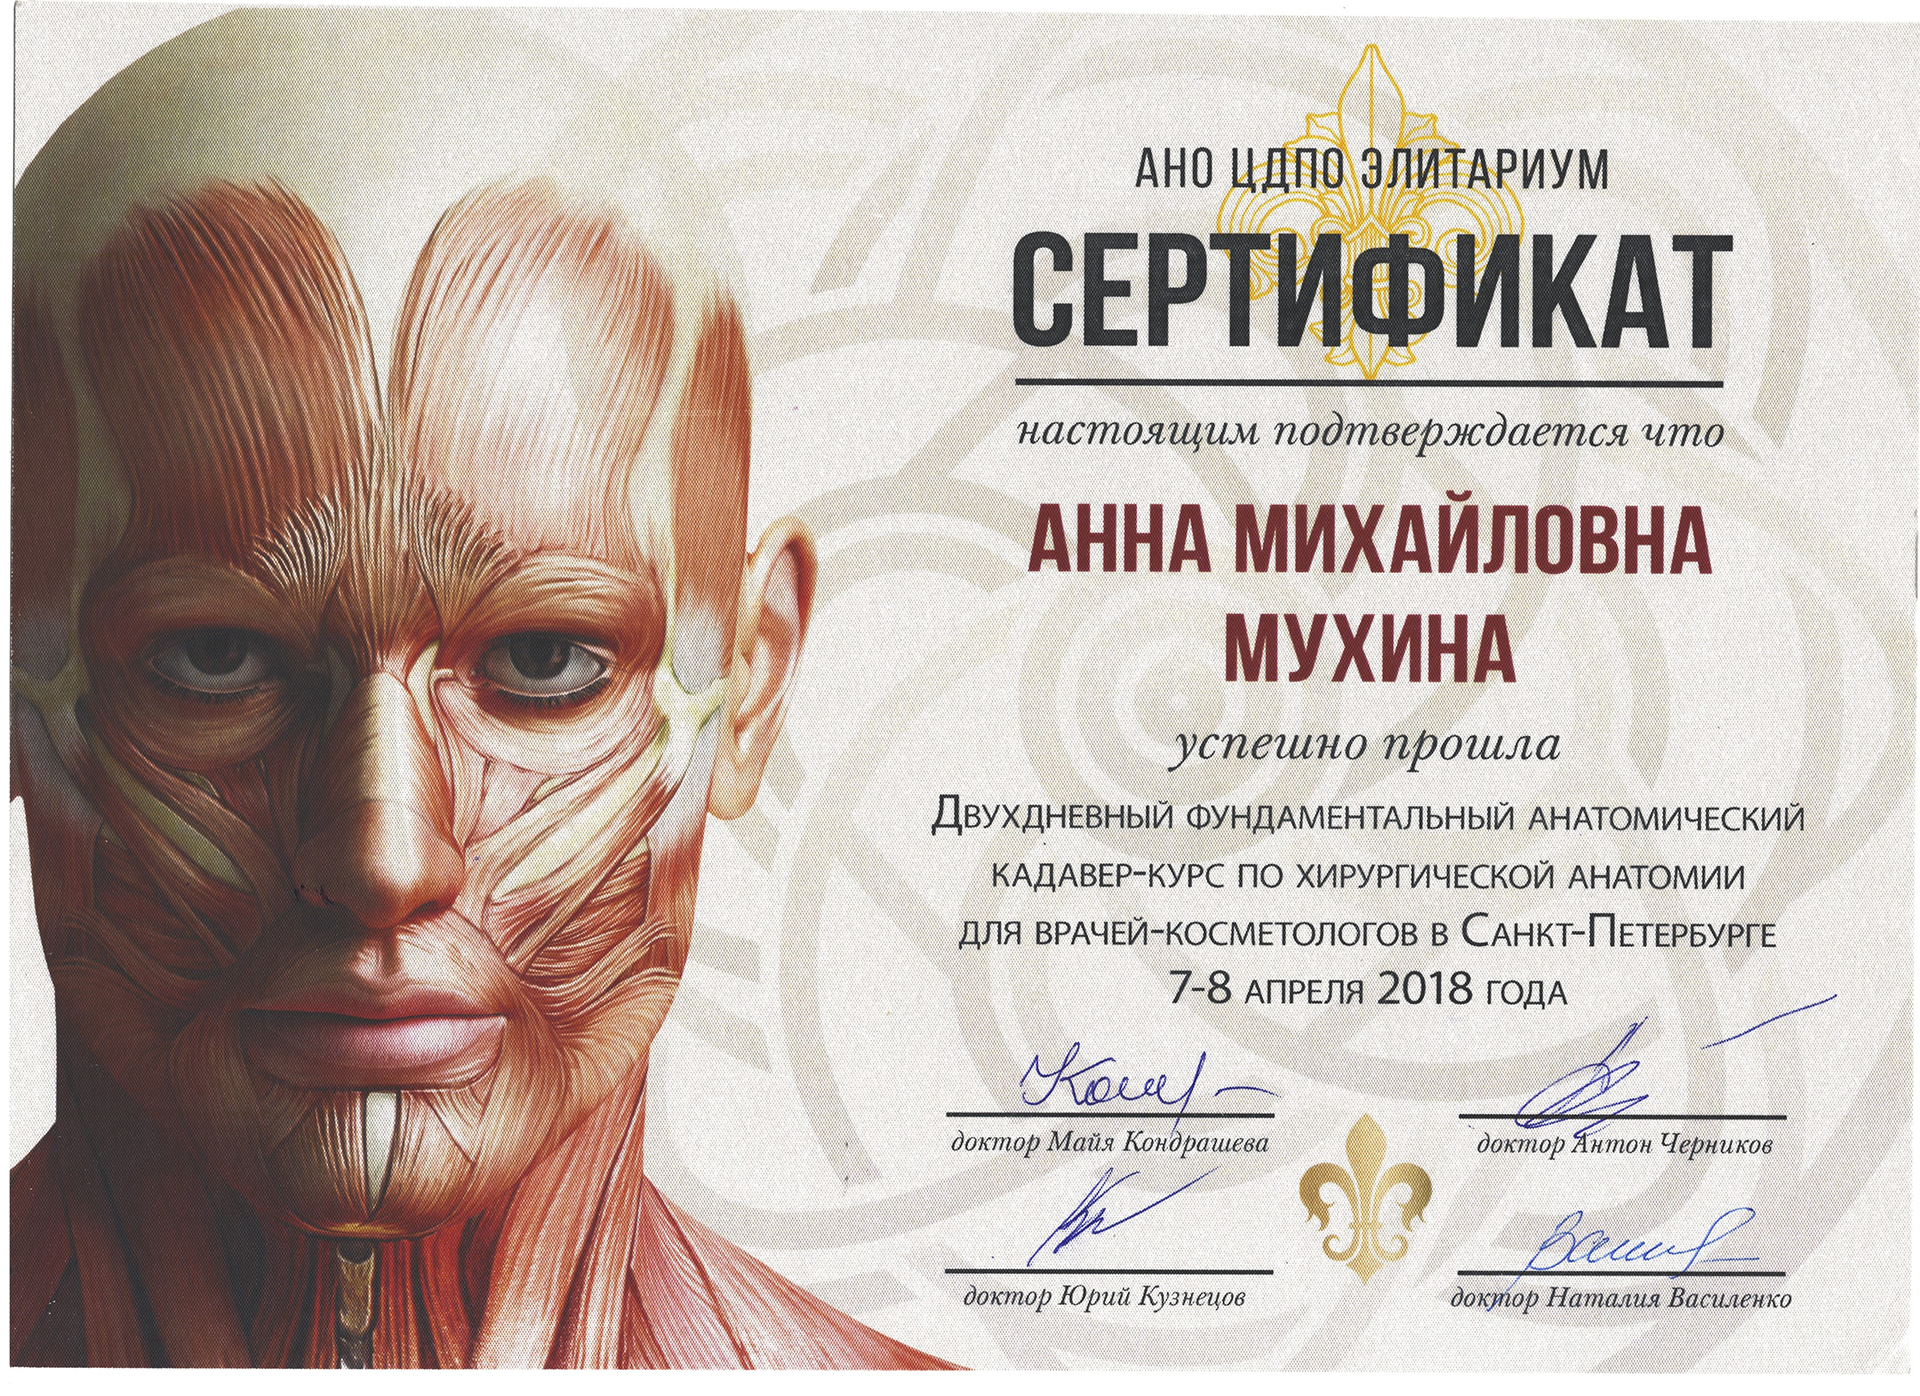 Сертификат — Кадавер-курс по хирургической анатомии. Мухина Анна Михайловна